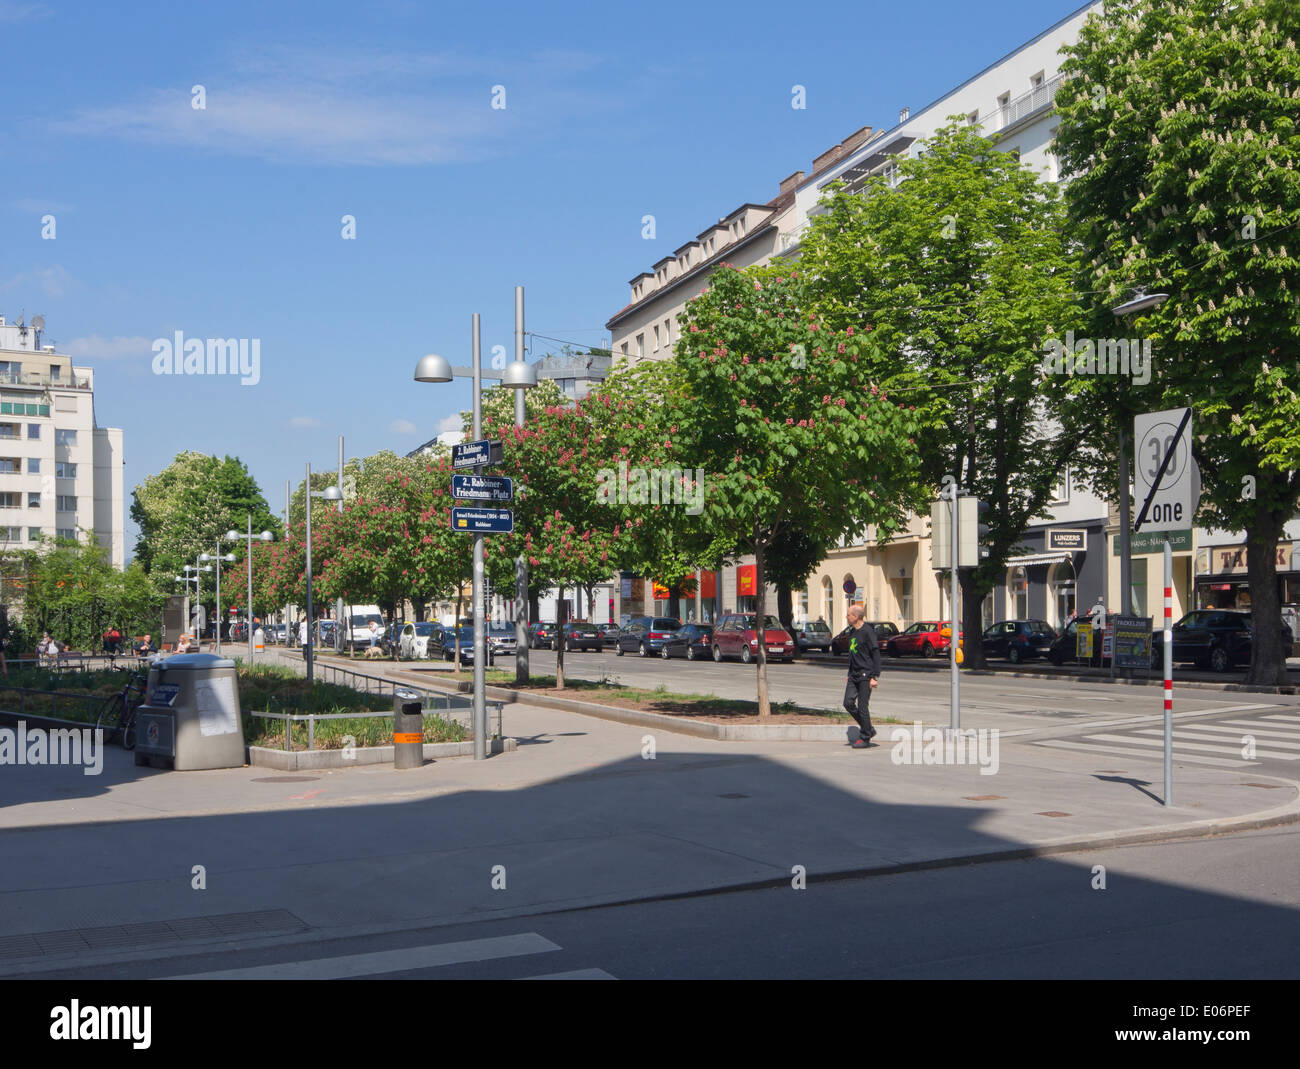 Rabbiner Friedmann Platz, a green city square in Vienna Austria with a horse-chestnut tree avenue Stock Photo